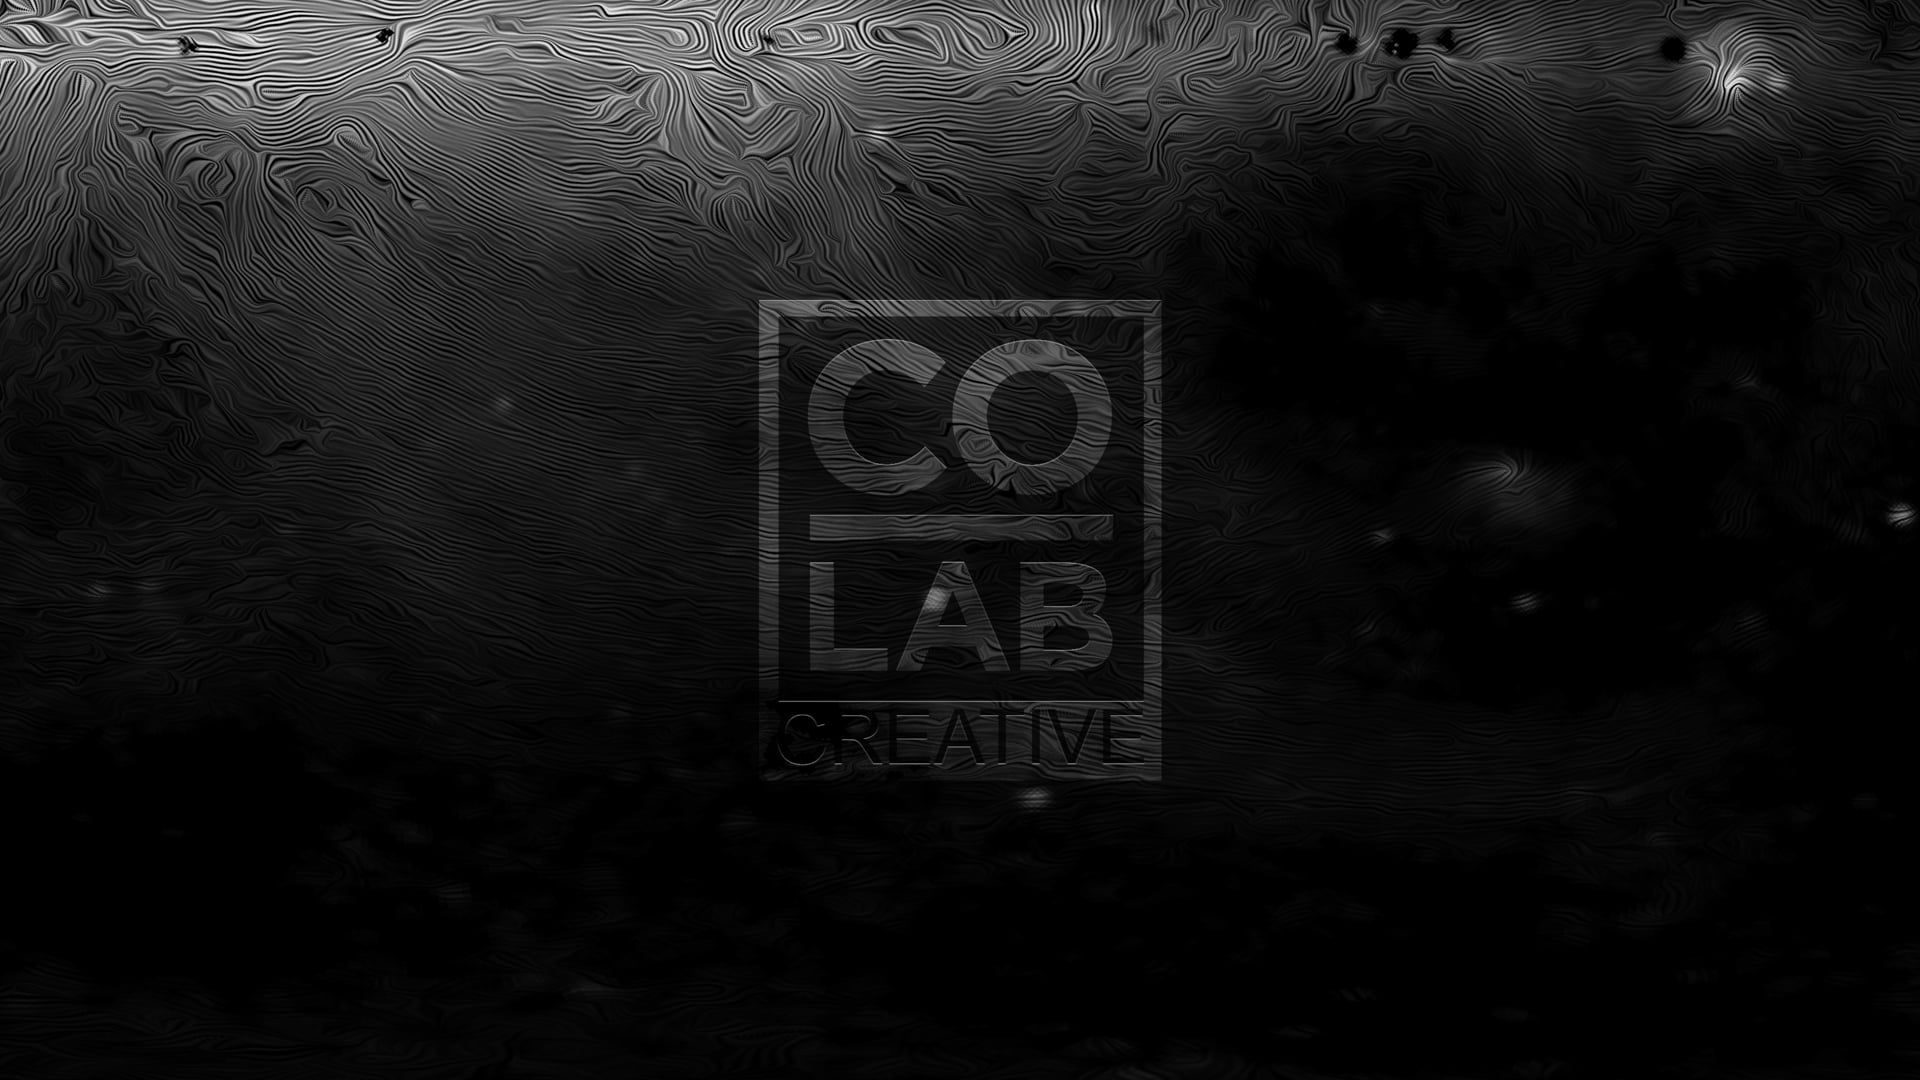 CoLab Creative Showreel 2016